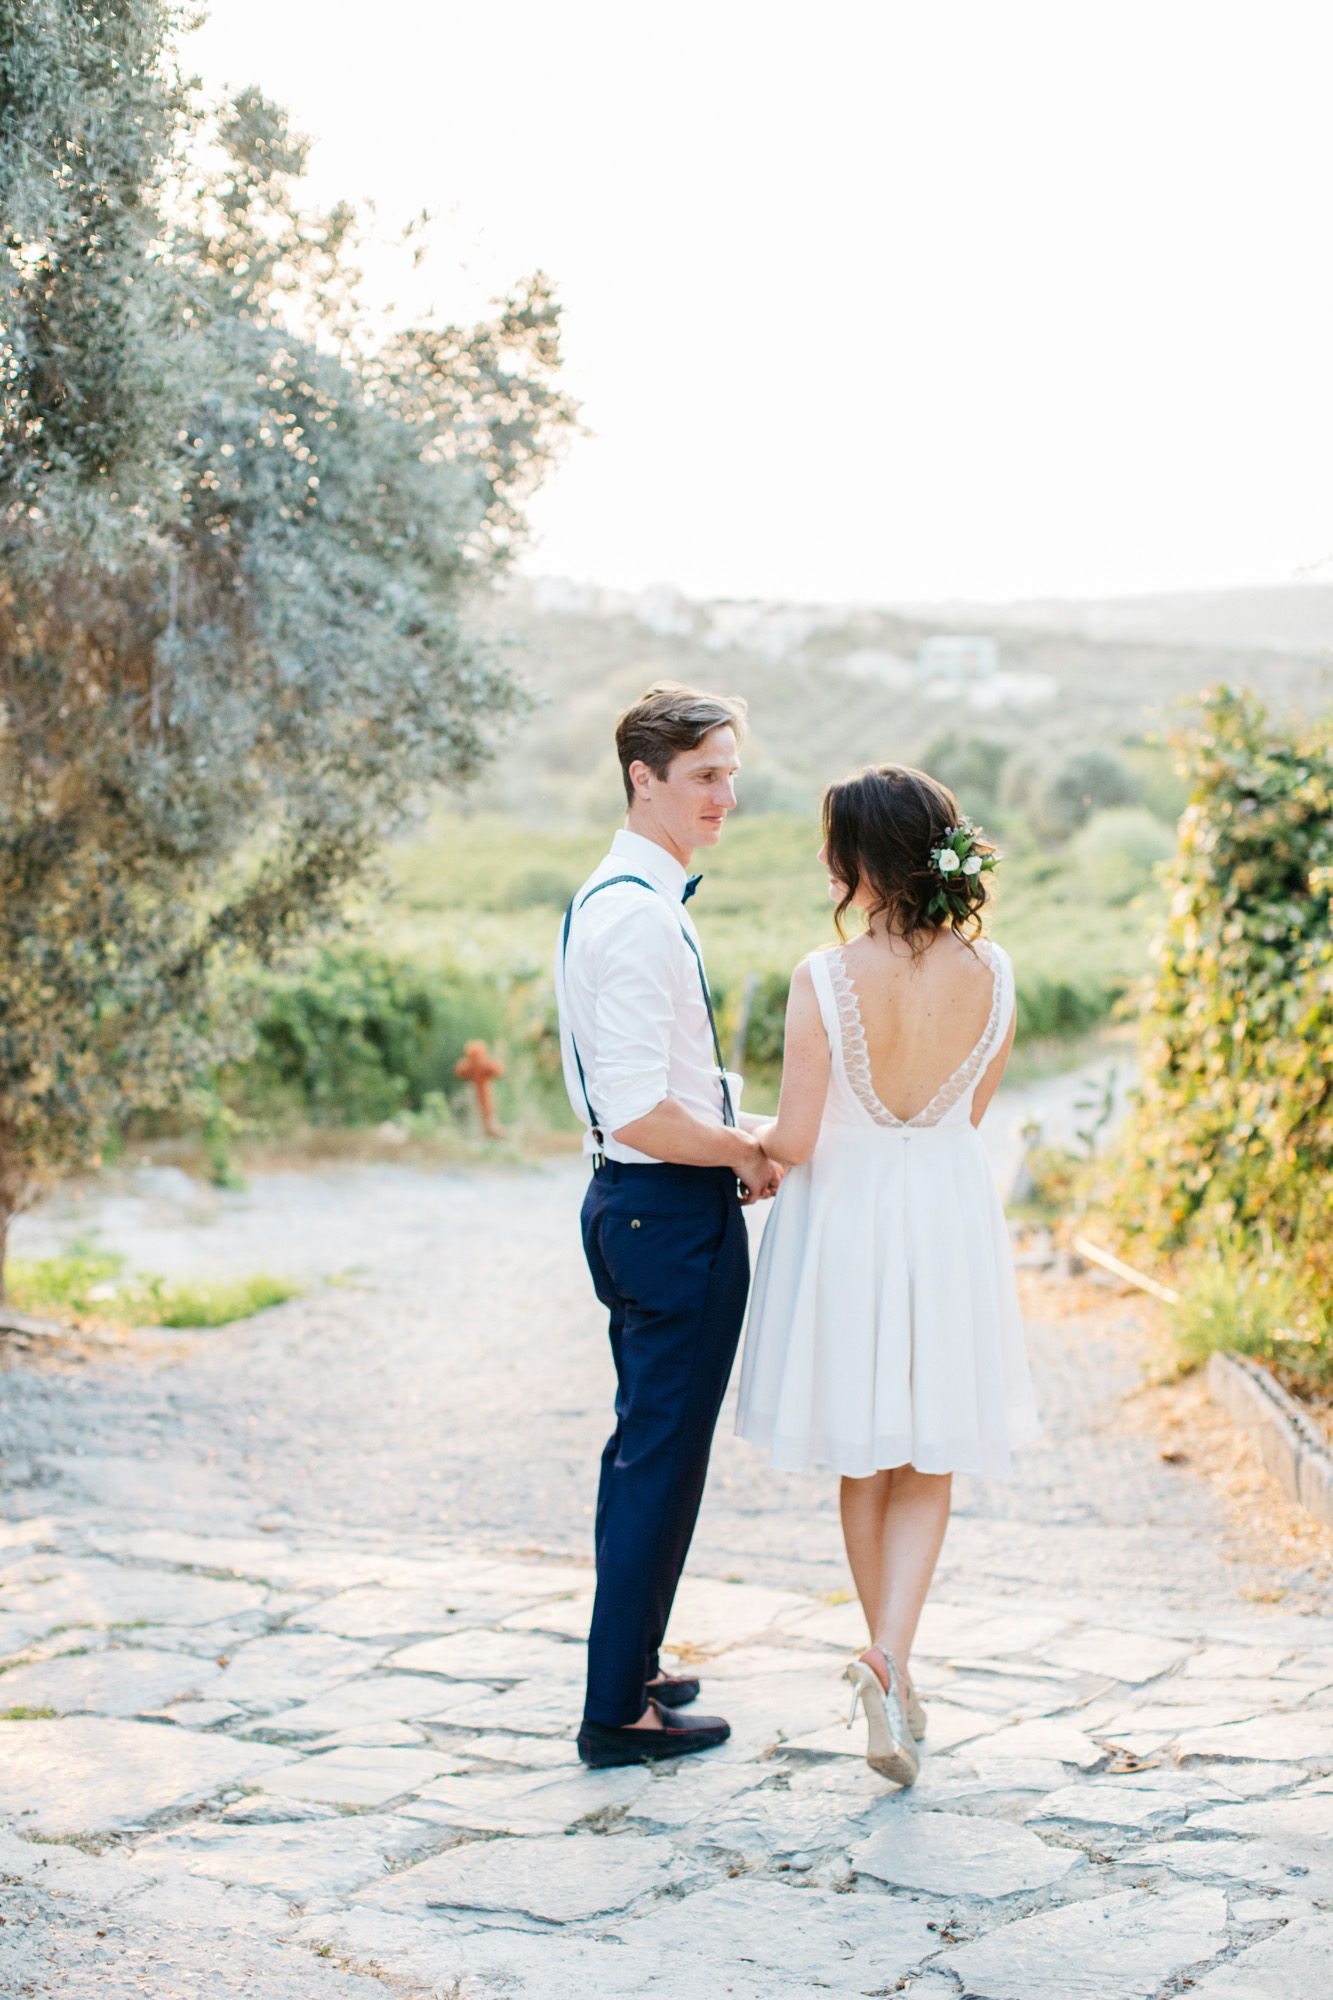 Happy newlyweds, bride and groom, at Grecotel Agreco Farm Crete Greece.